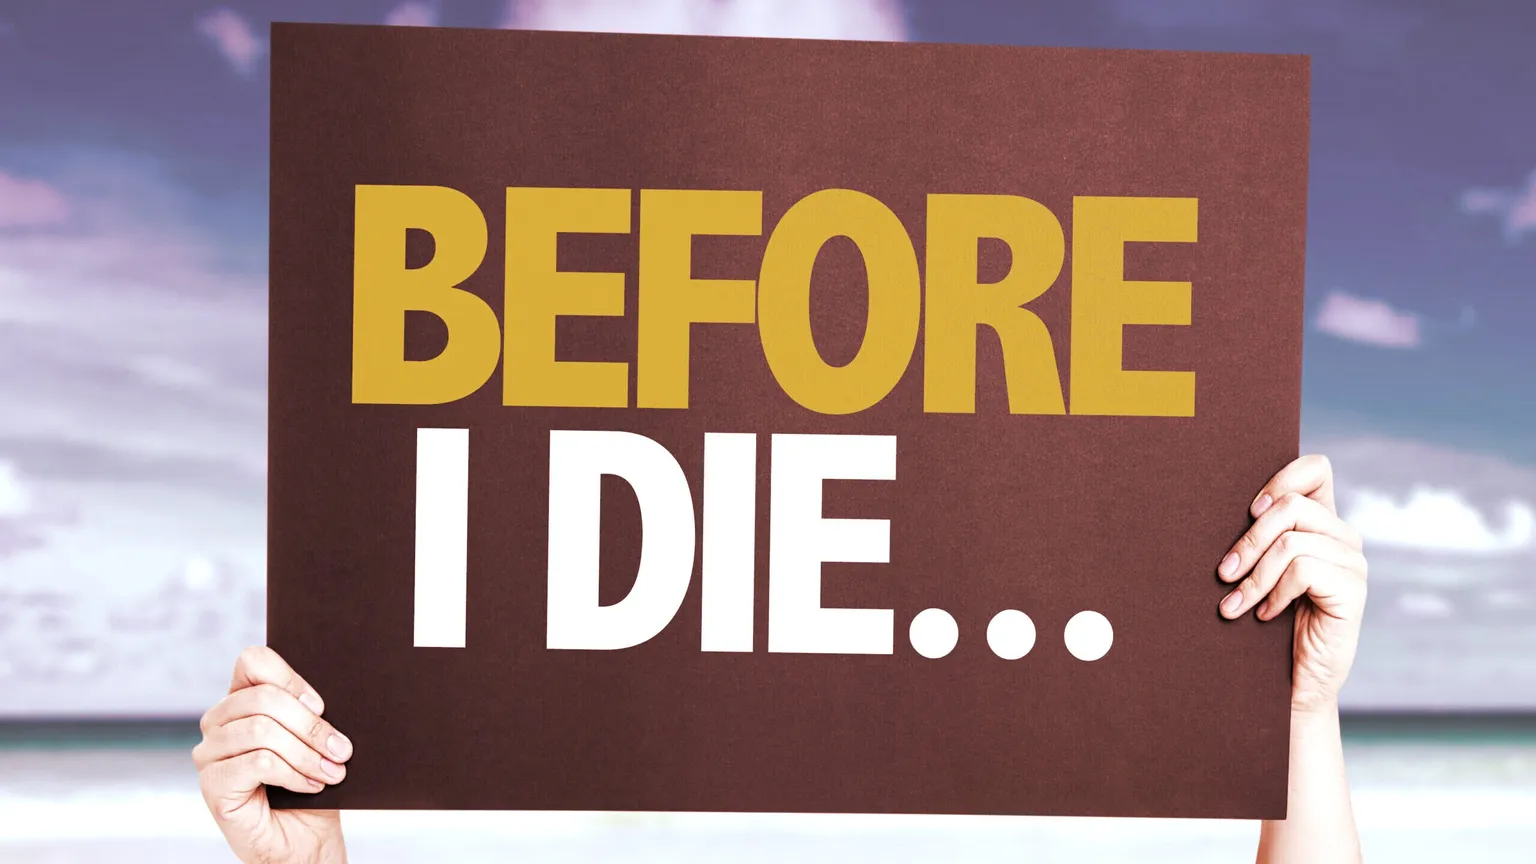 "Before I die..." Image: Shutterstock